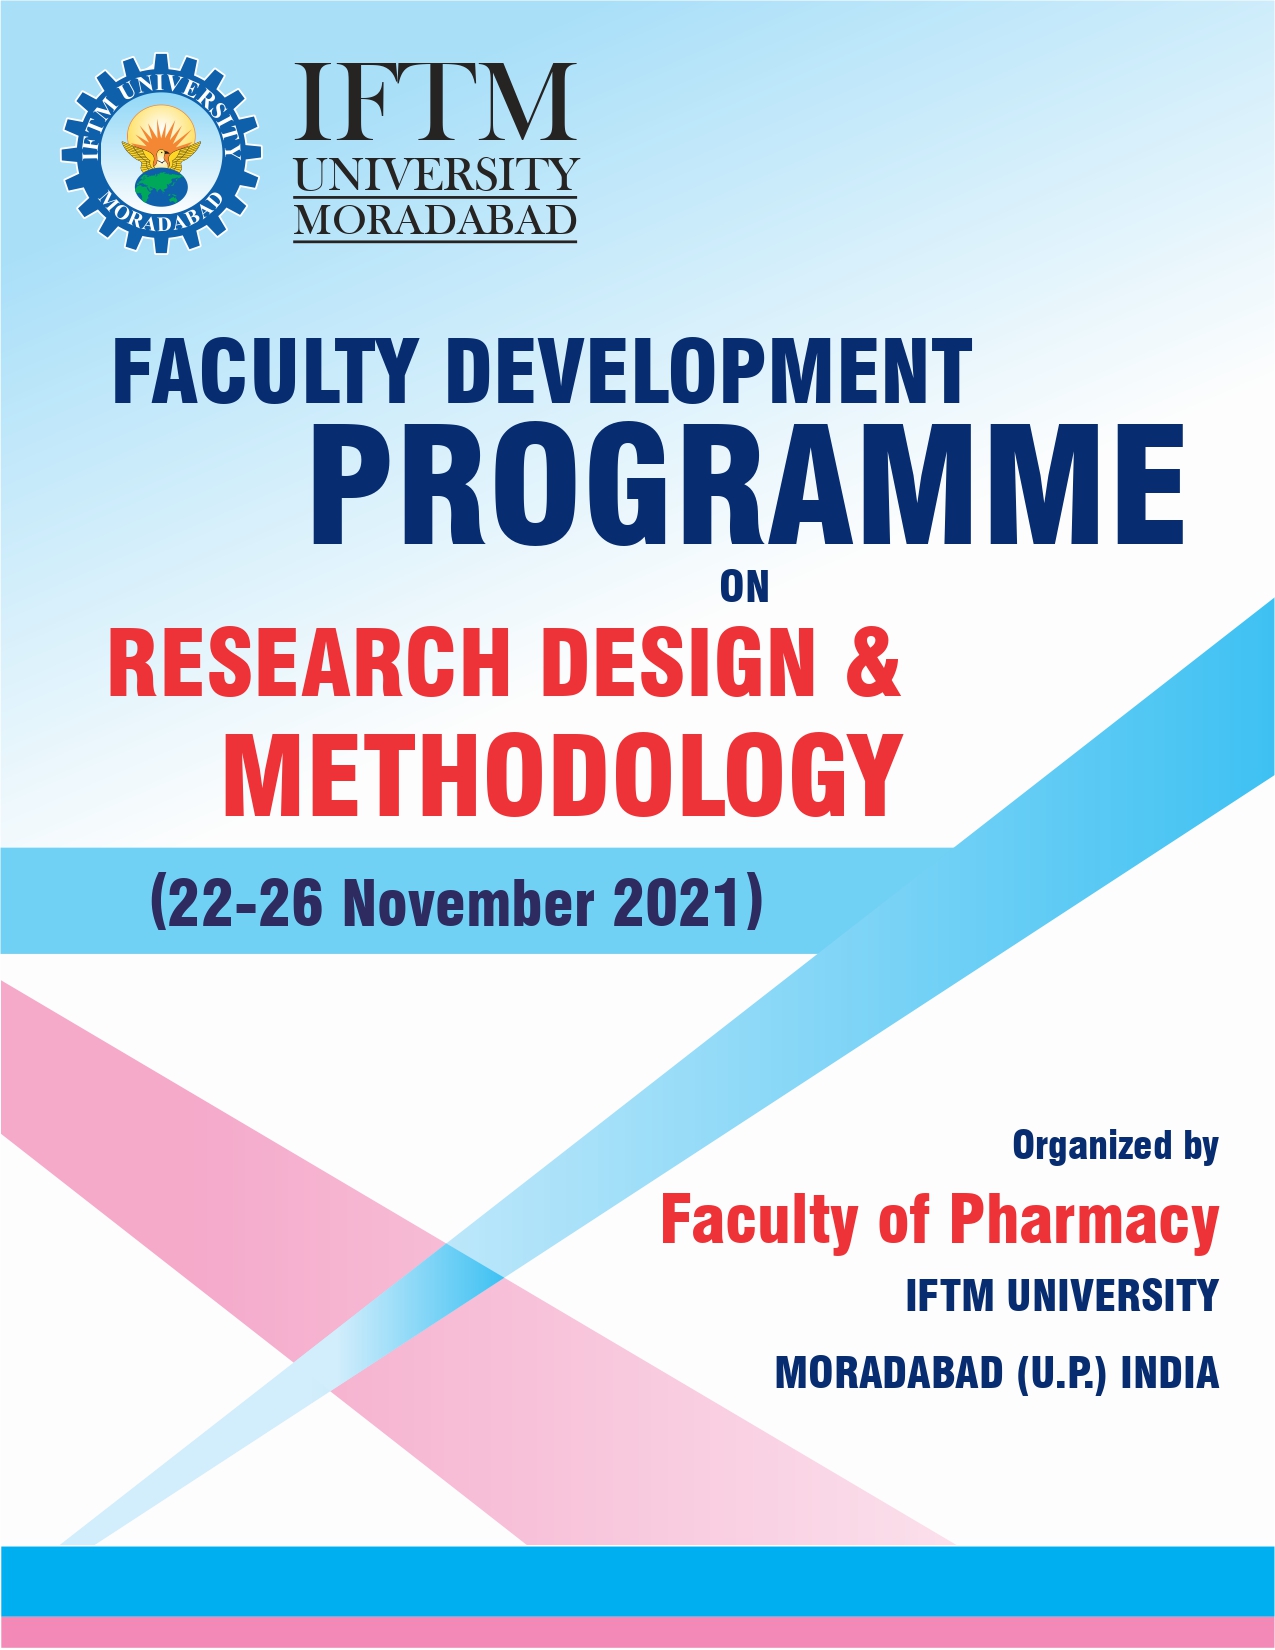 Online Faculty Development Programme (FDP) on Research Design & Methodology